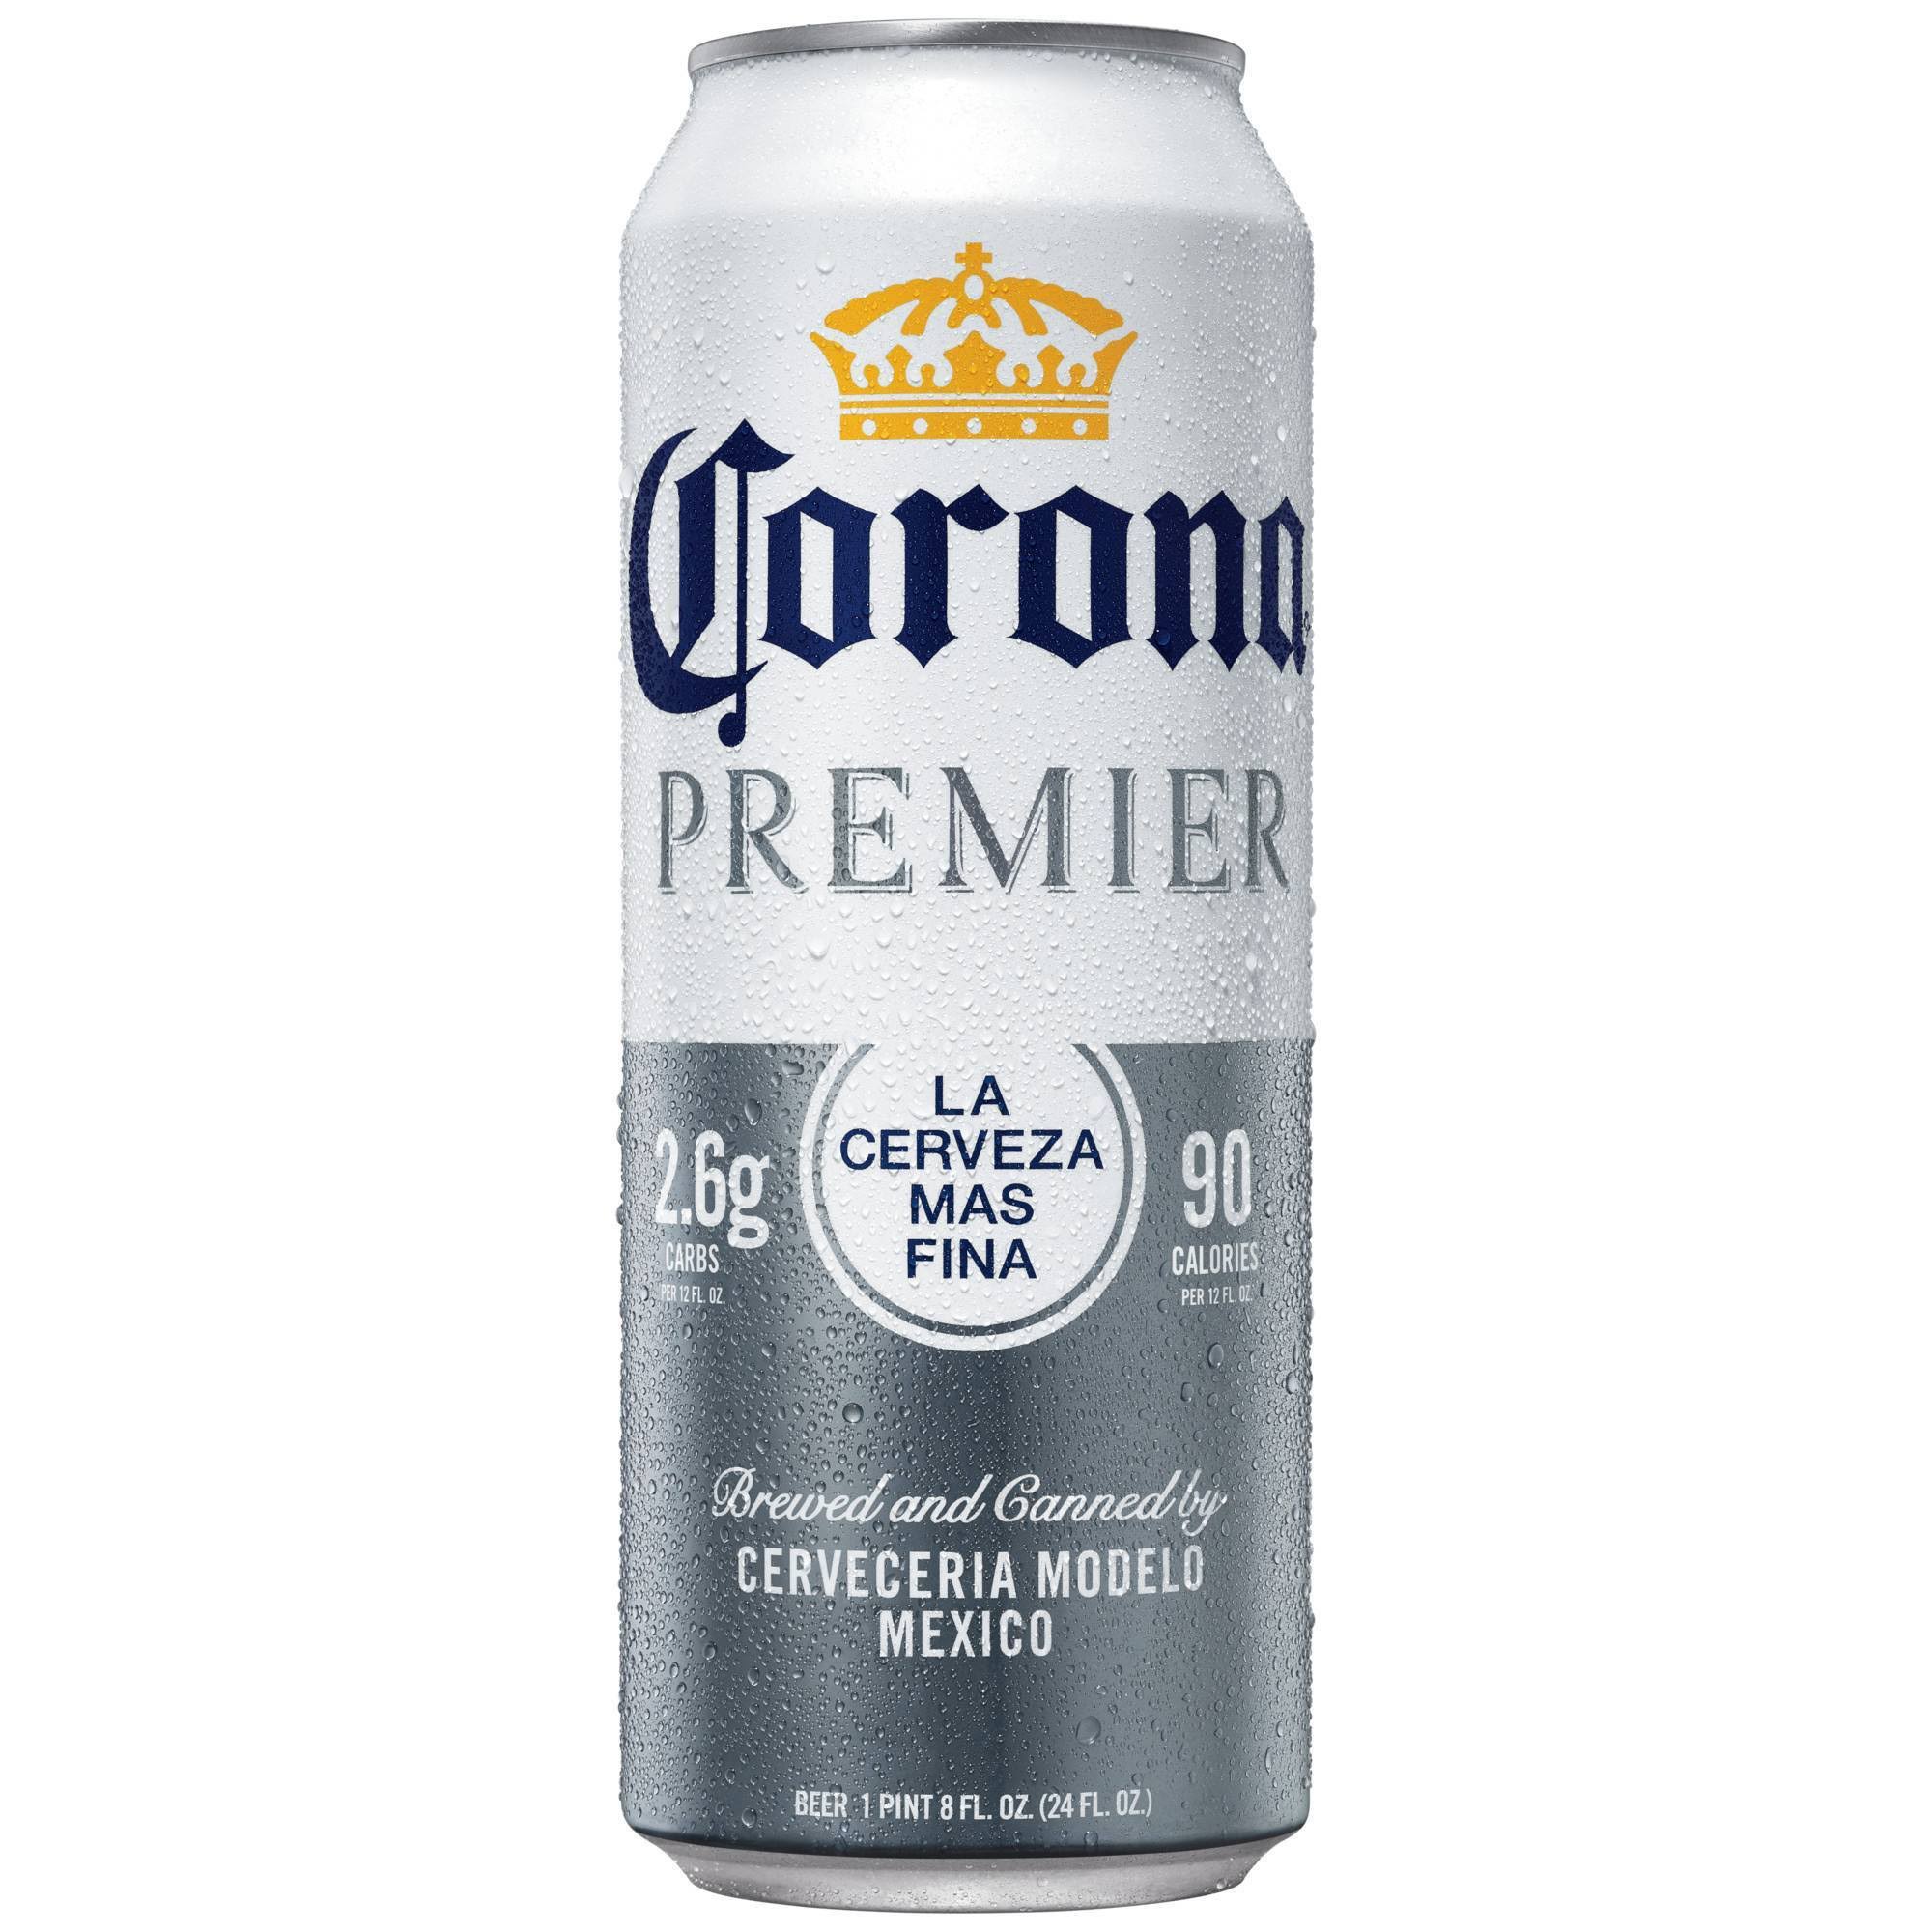 Corona Premier Beer - 1 pint 8 fl oz (24 fl oz)